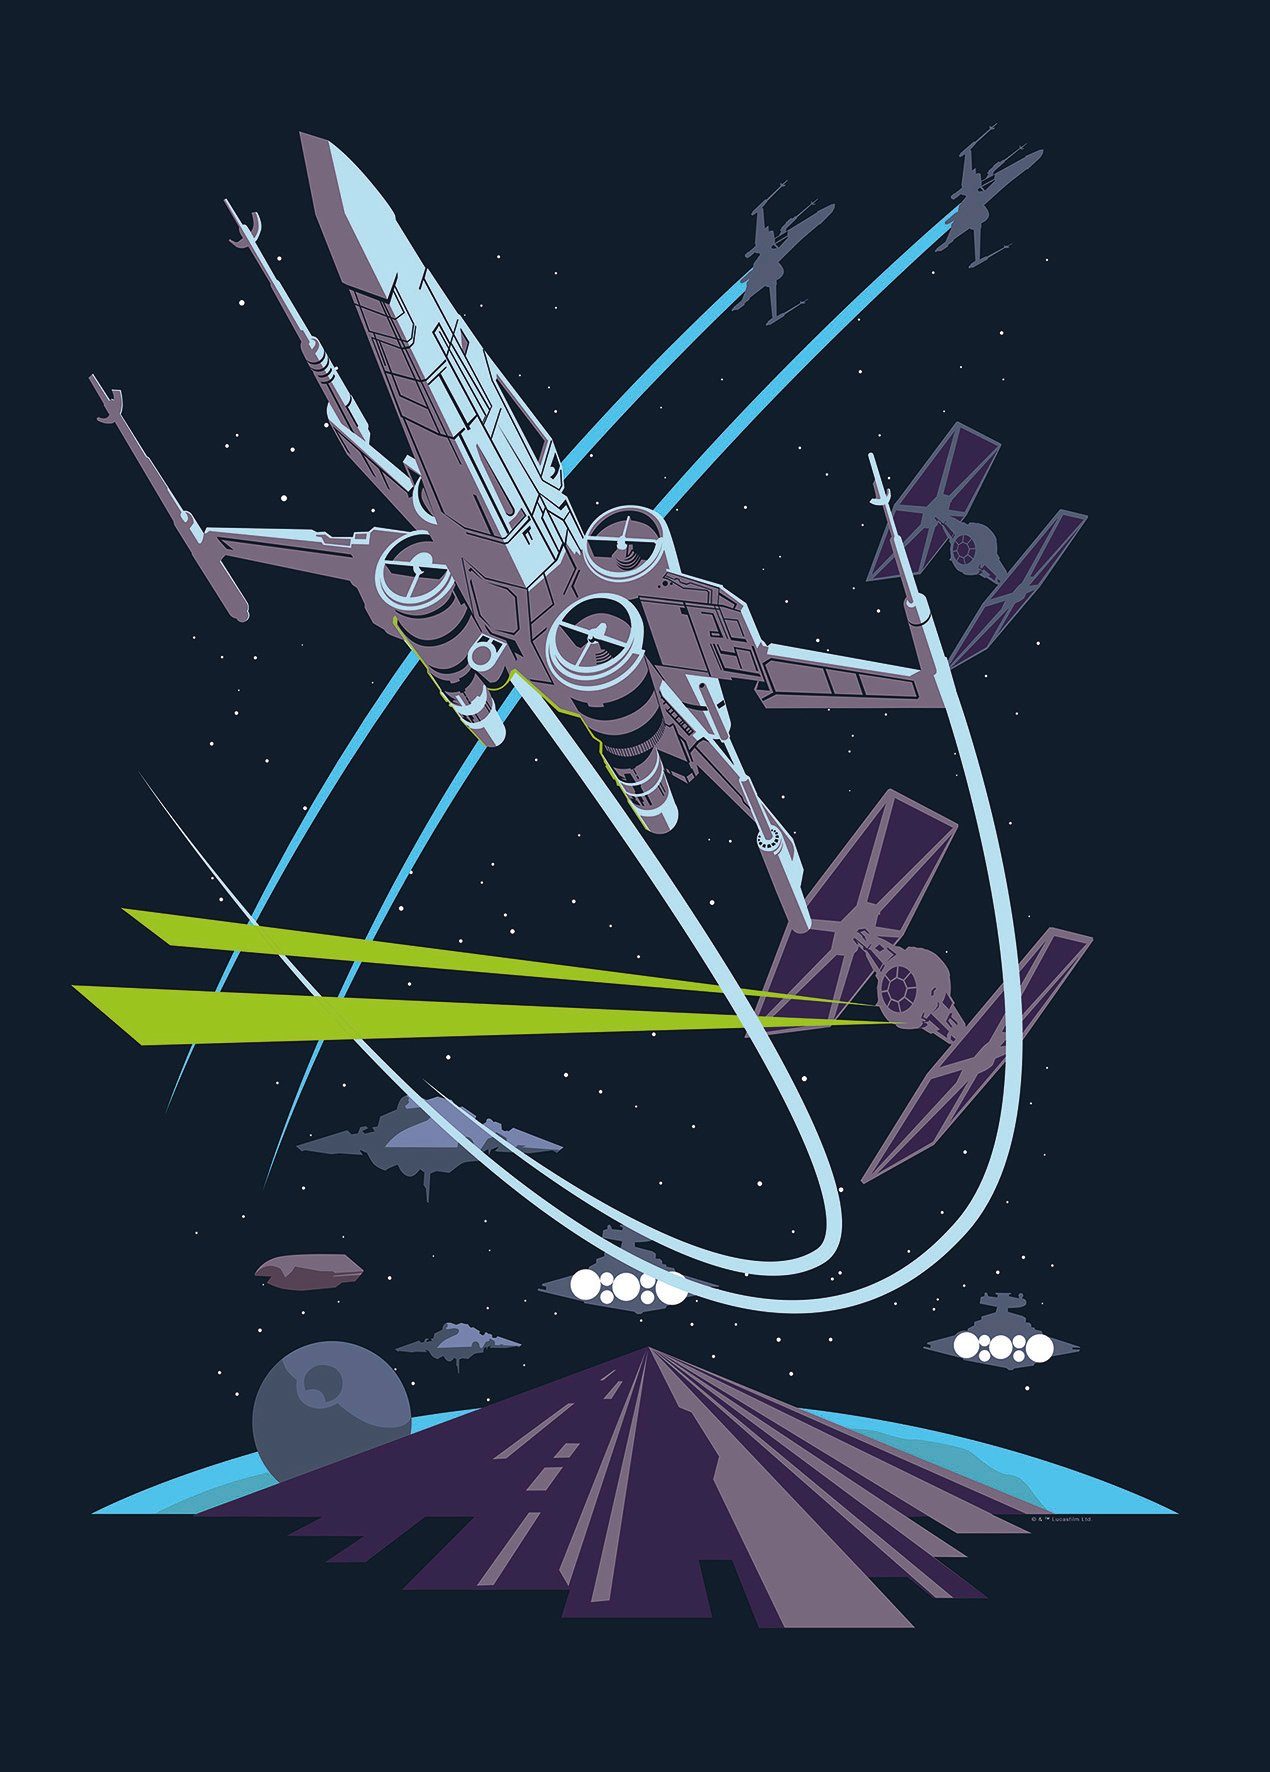 Komar Poster Star Wars Classic Vector X-Wing